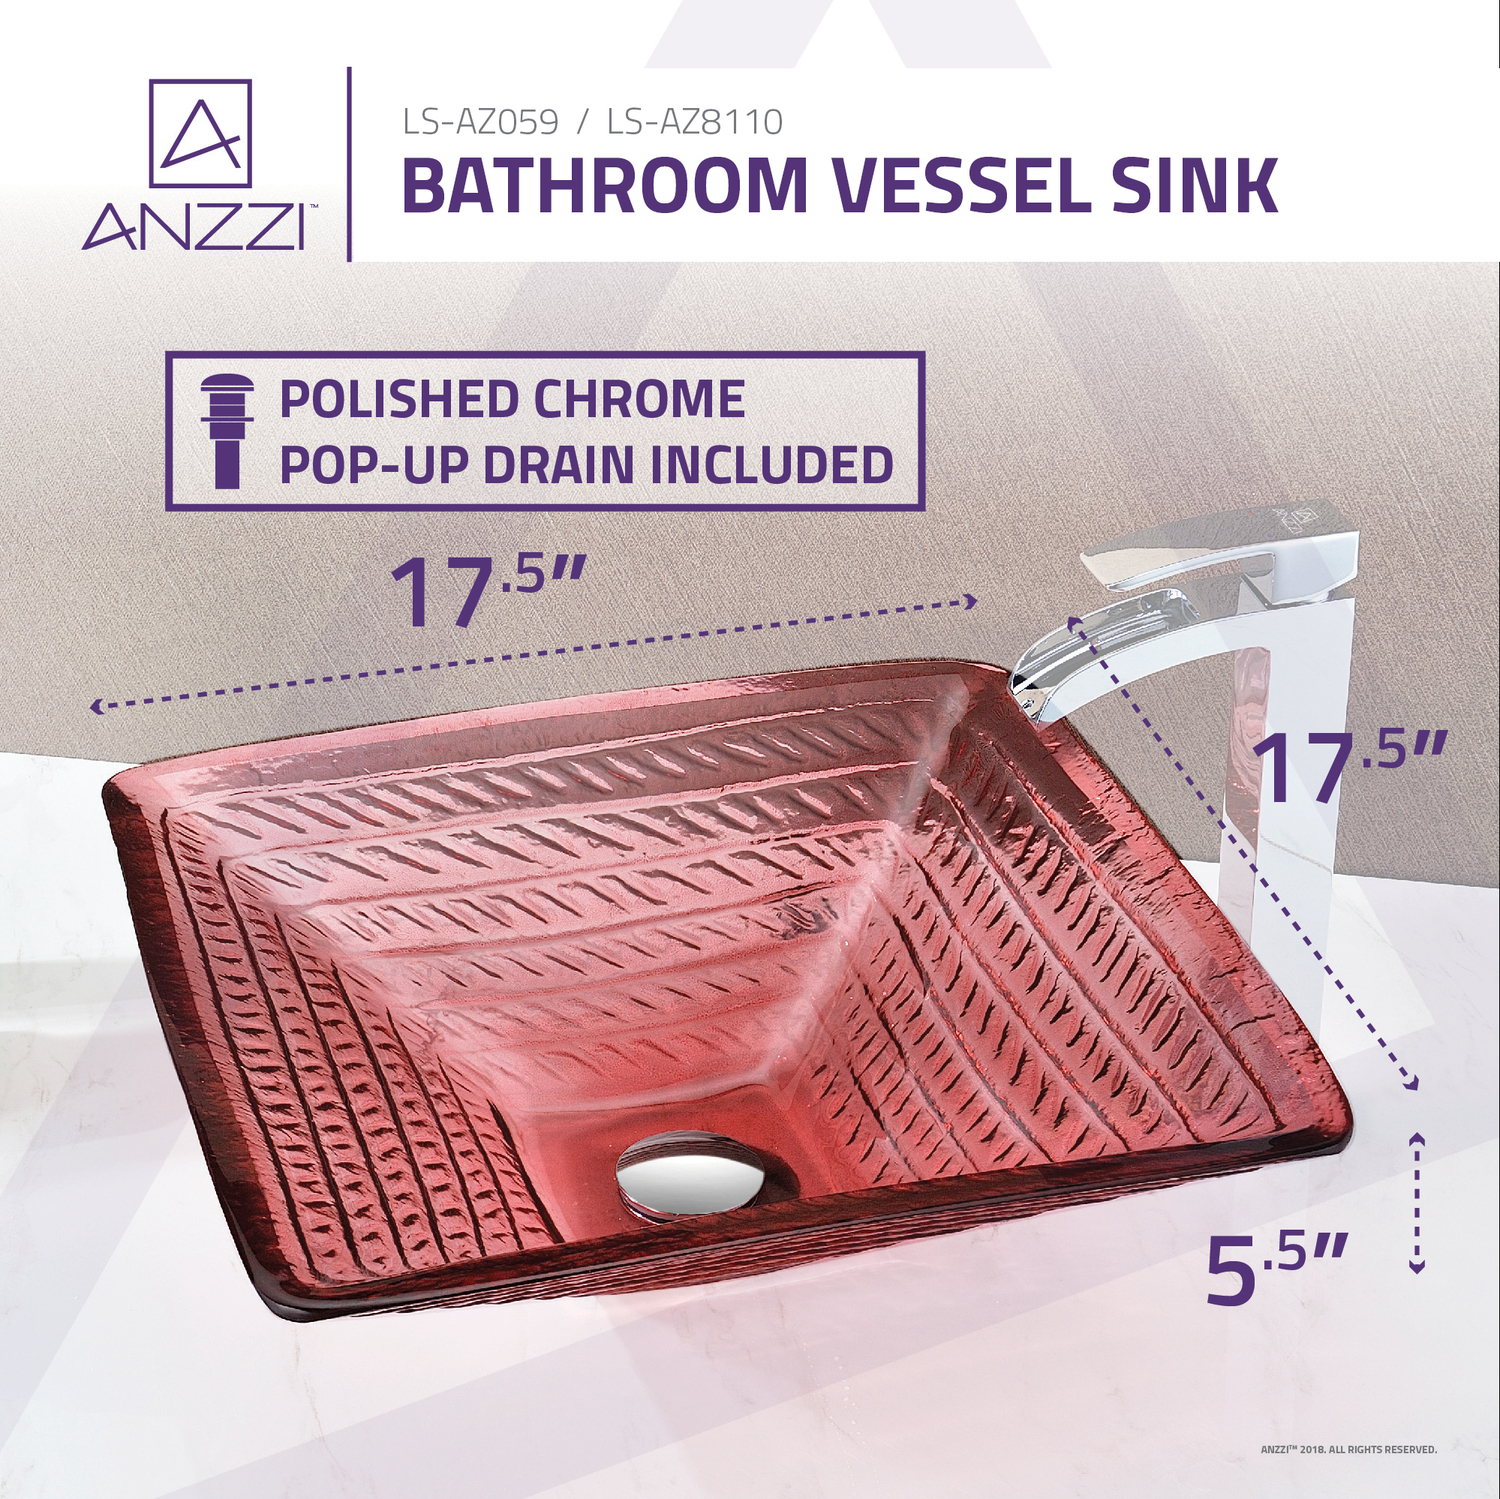 cheap vessel sinks Anzzi BATHROOM - Sinks - Vessel - Tempered Glass Red